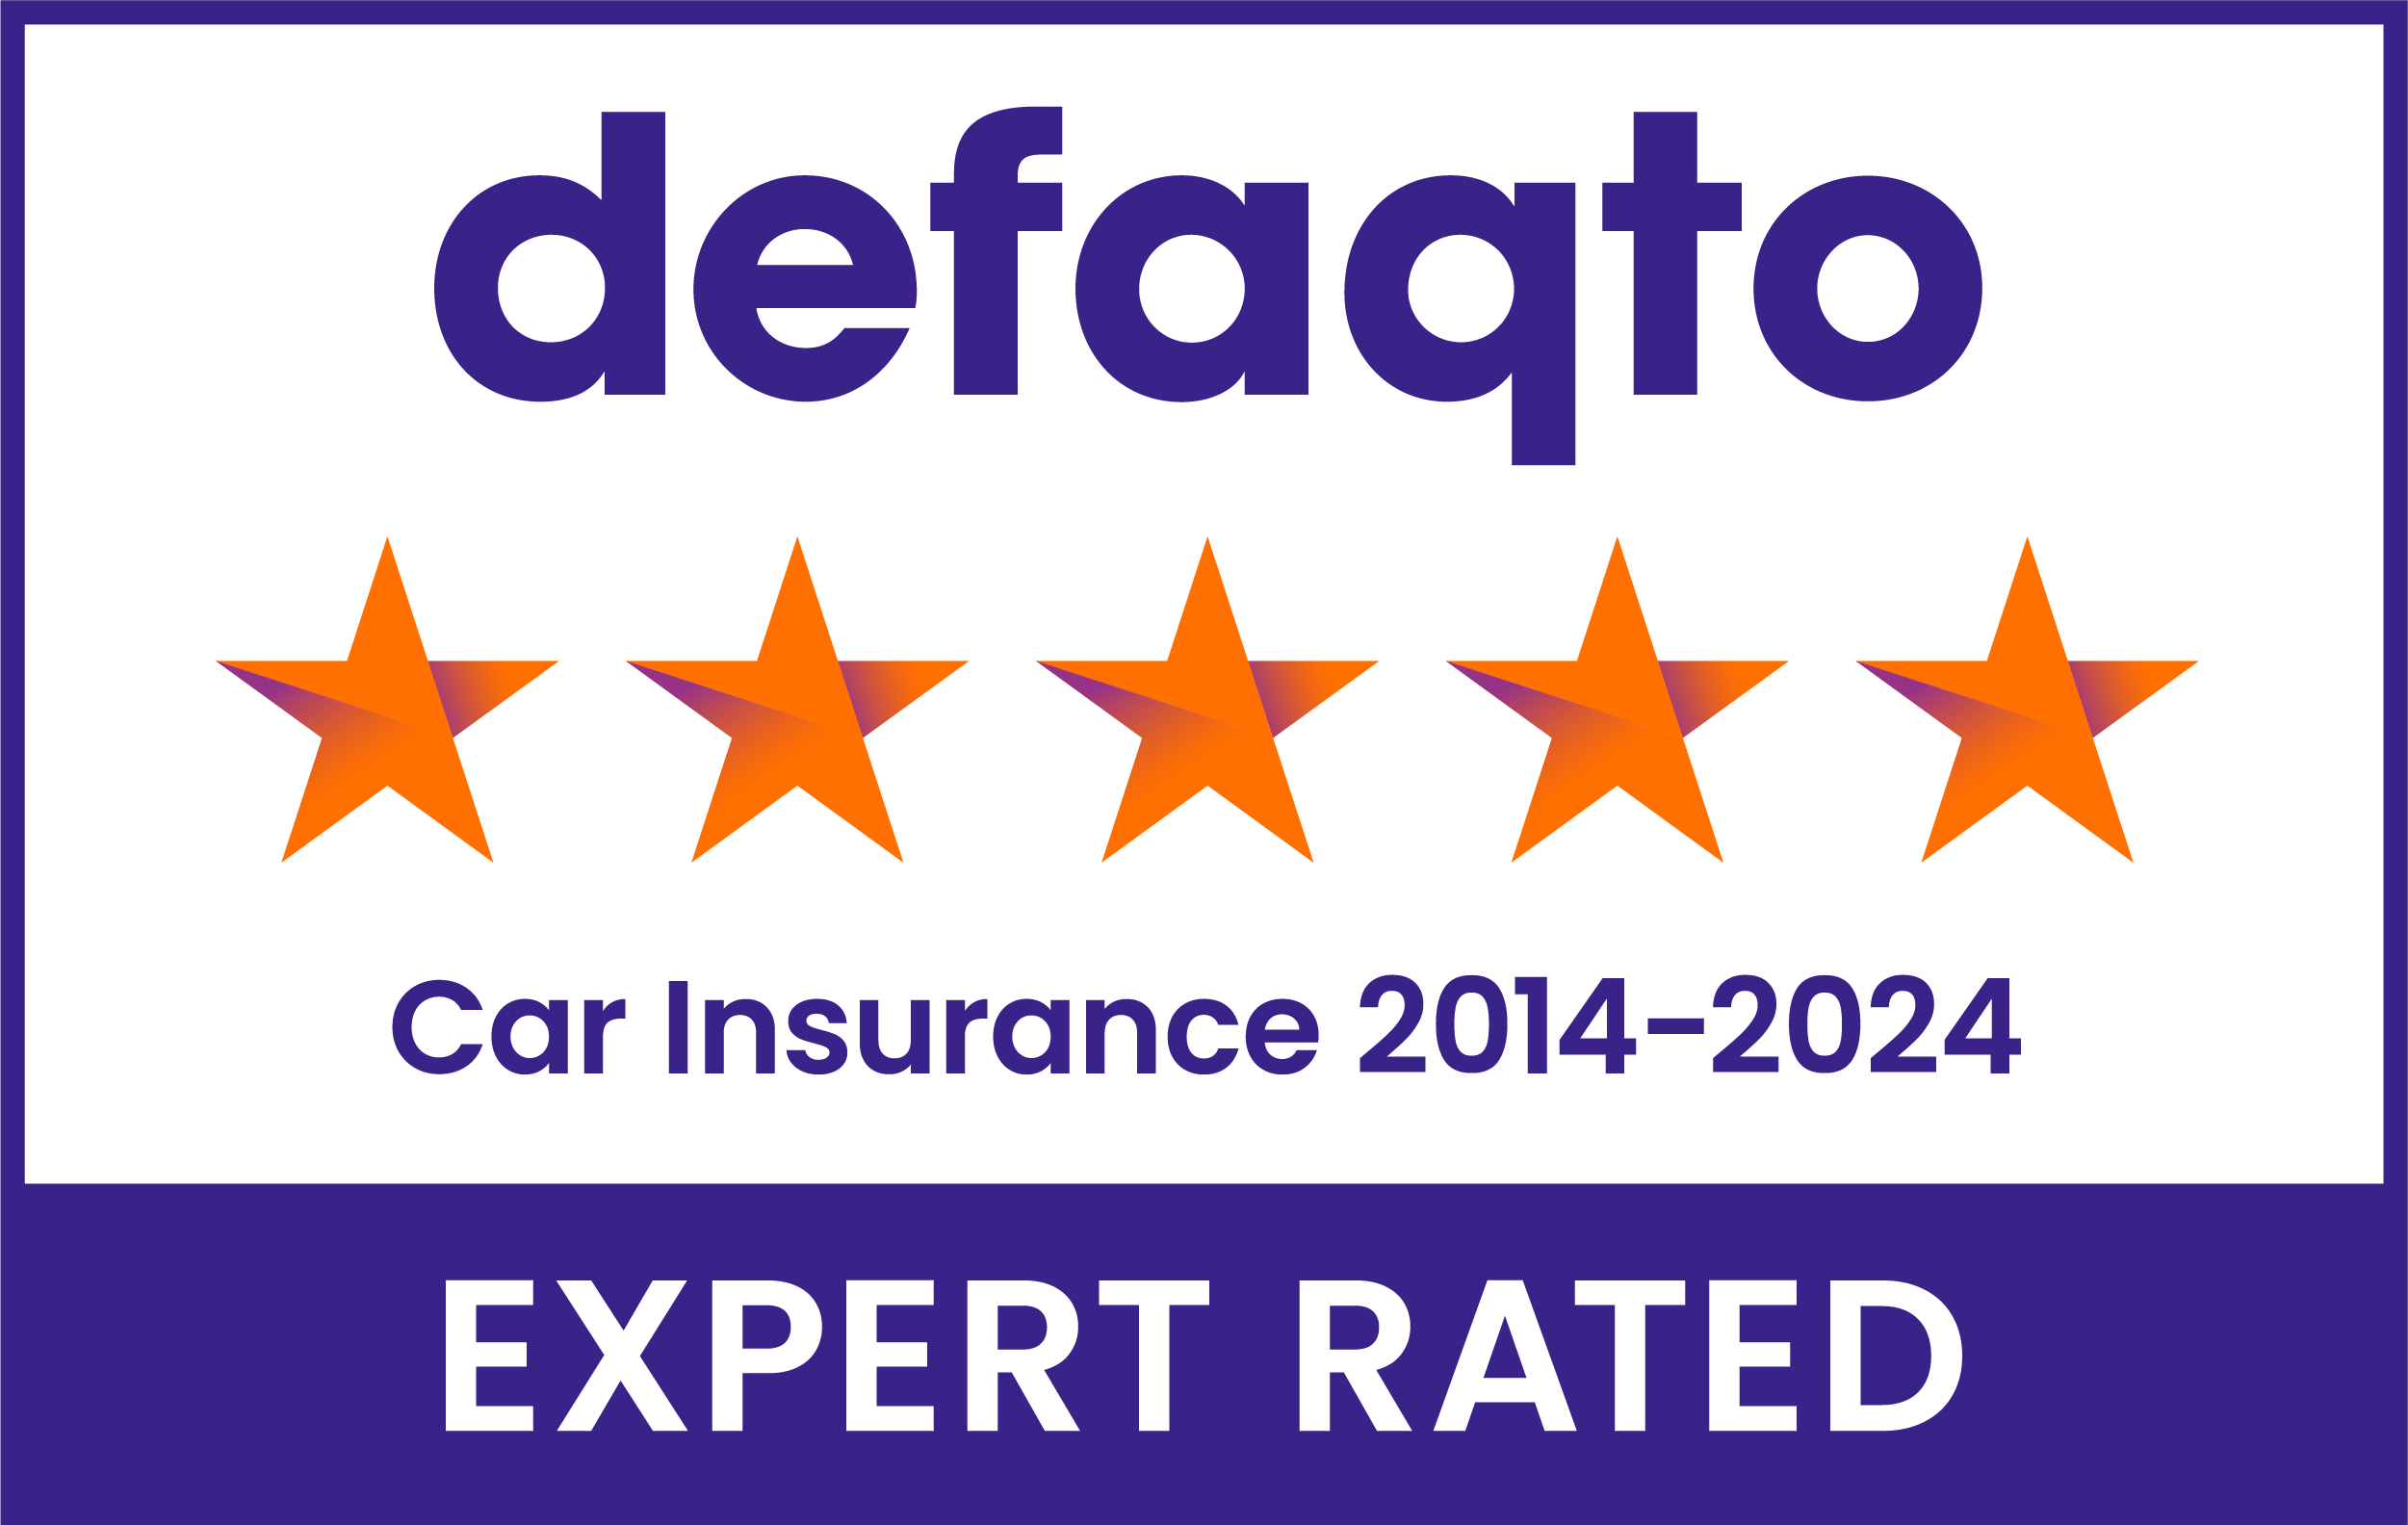 The Defaqto 5 Star rated logo